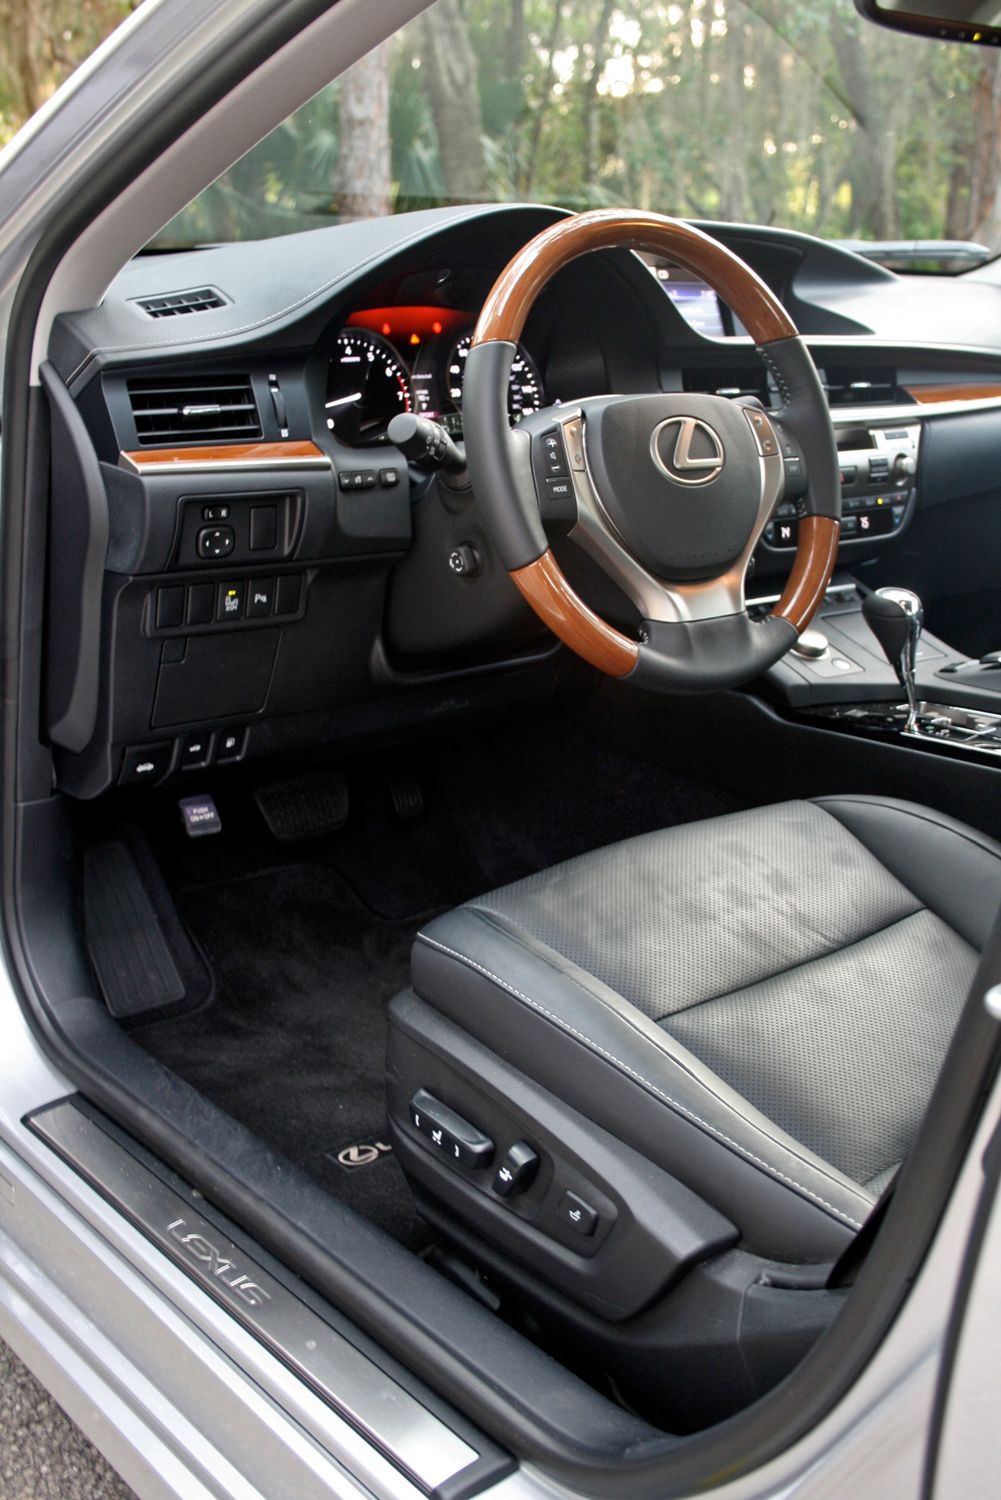 2014 Lexus ES 350 - Driven